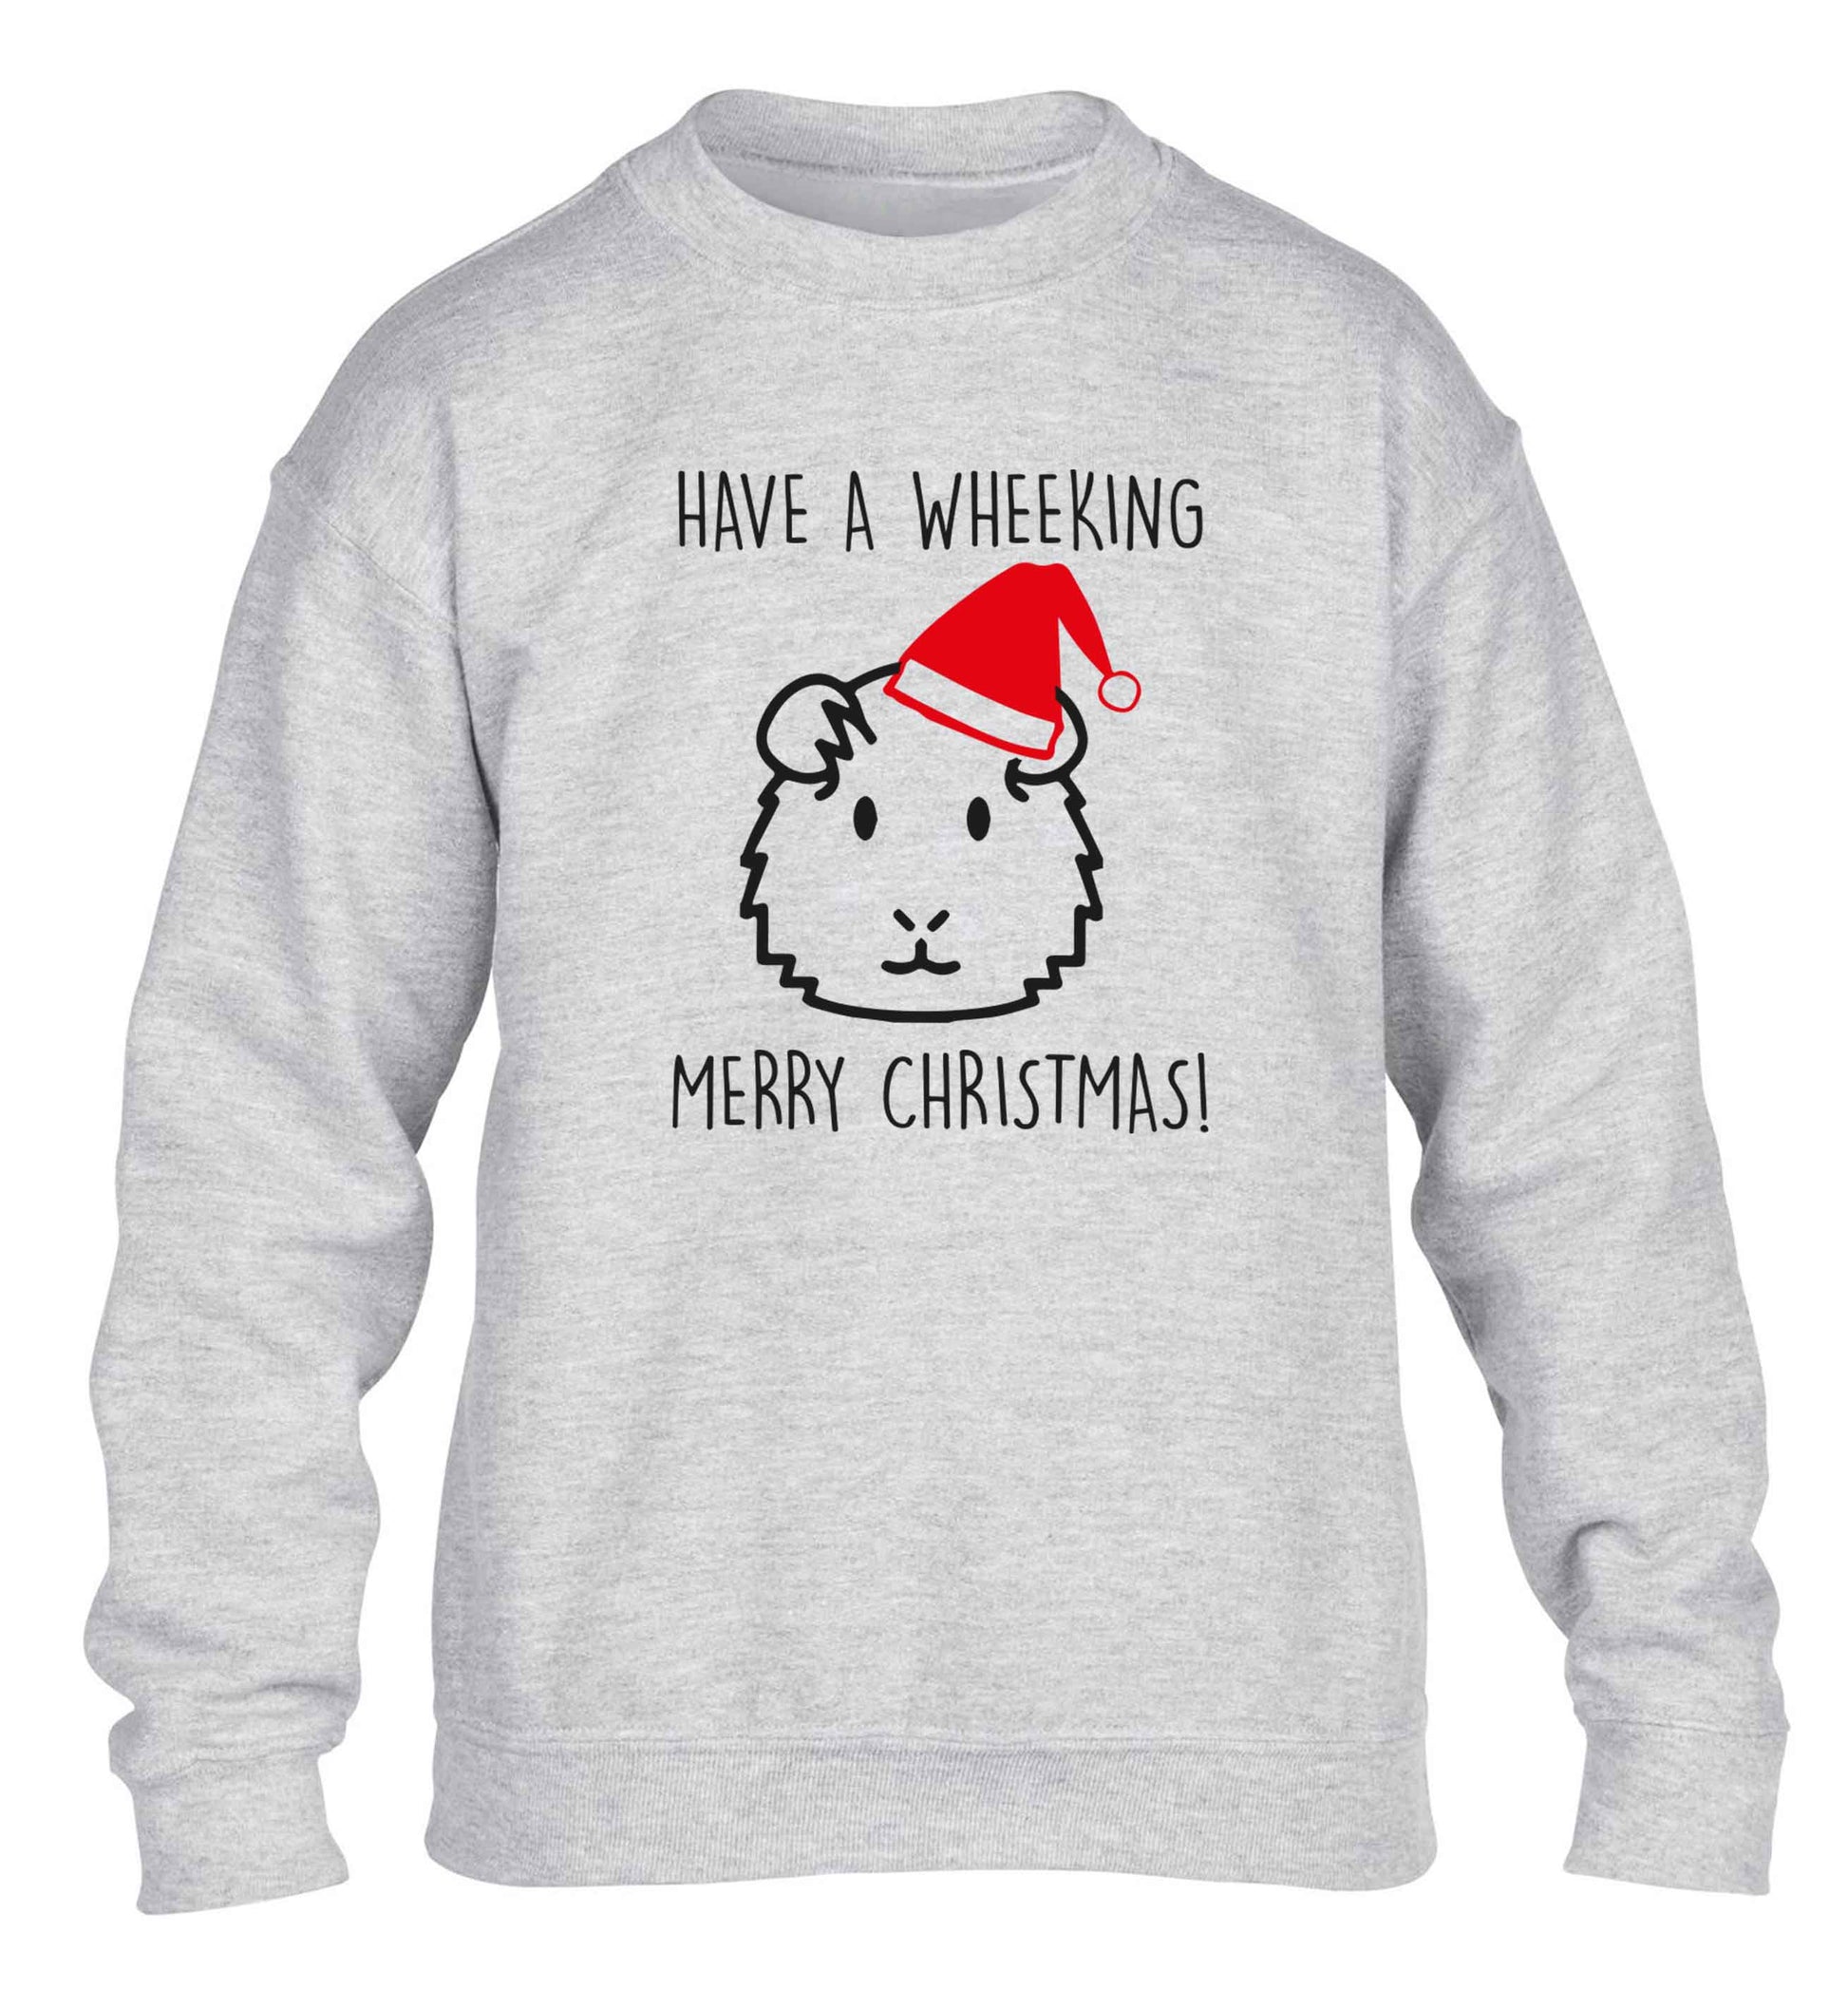 Have a wheeking merry Christmas children's grey sweater 12-13 Years